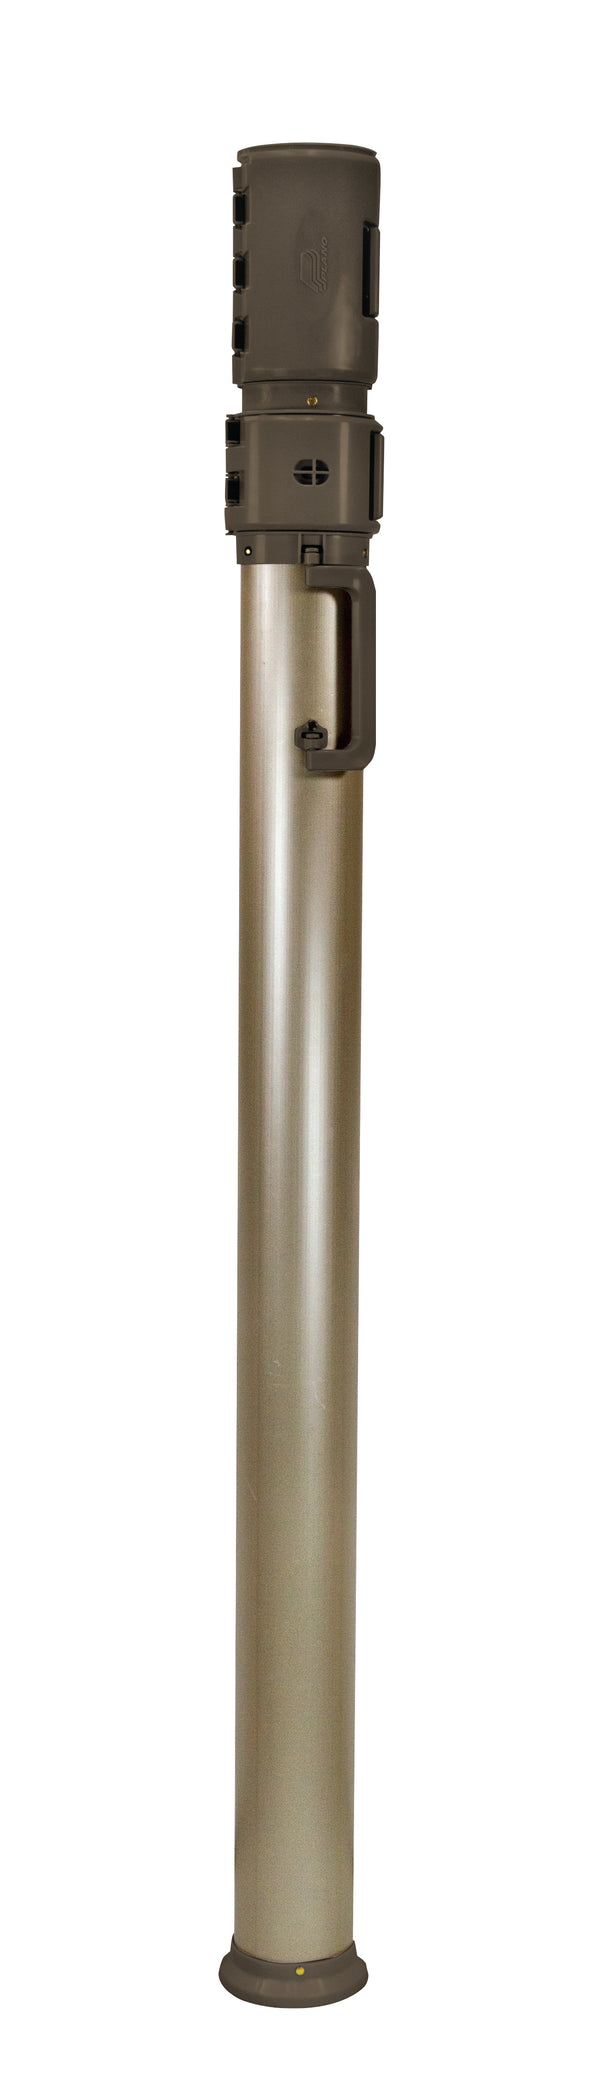 Plano Guide Series Adjustable Rod Tube